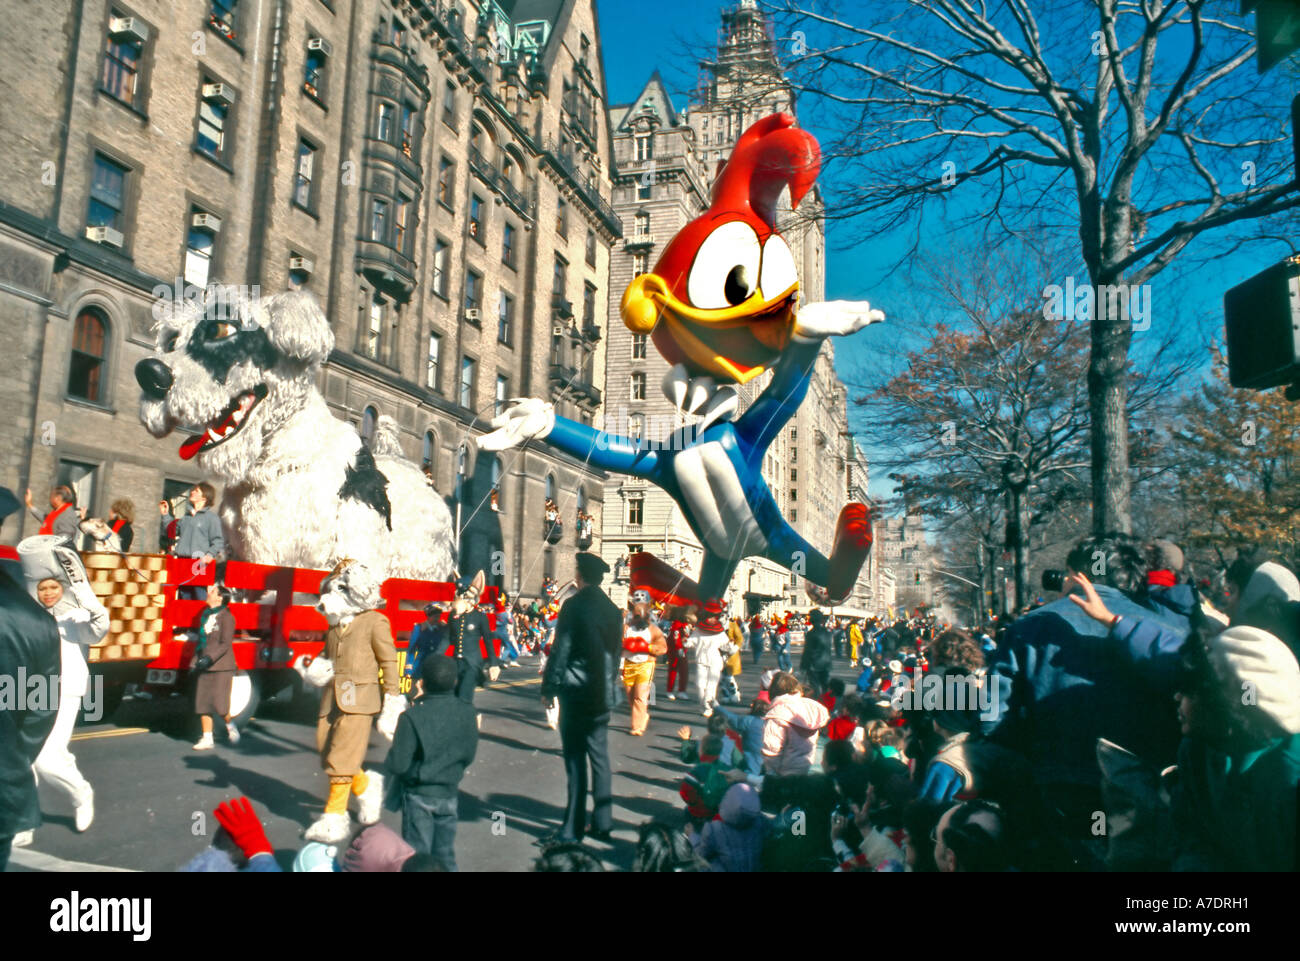 New York, NY, États-Unis d'événements publics, Woody Woodpecker ballon géant  le caractère 'Macy's Thanksgiving Day Parade' foule Photo Stock - Alamy